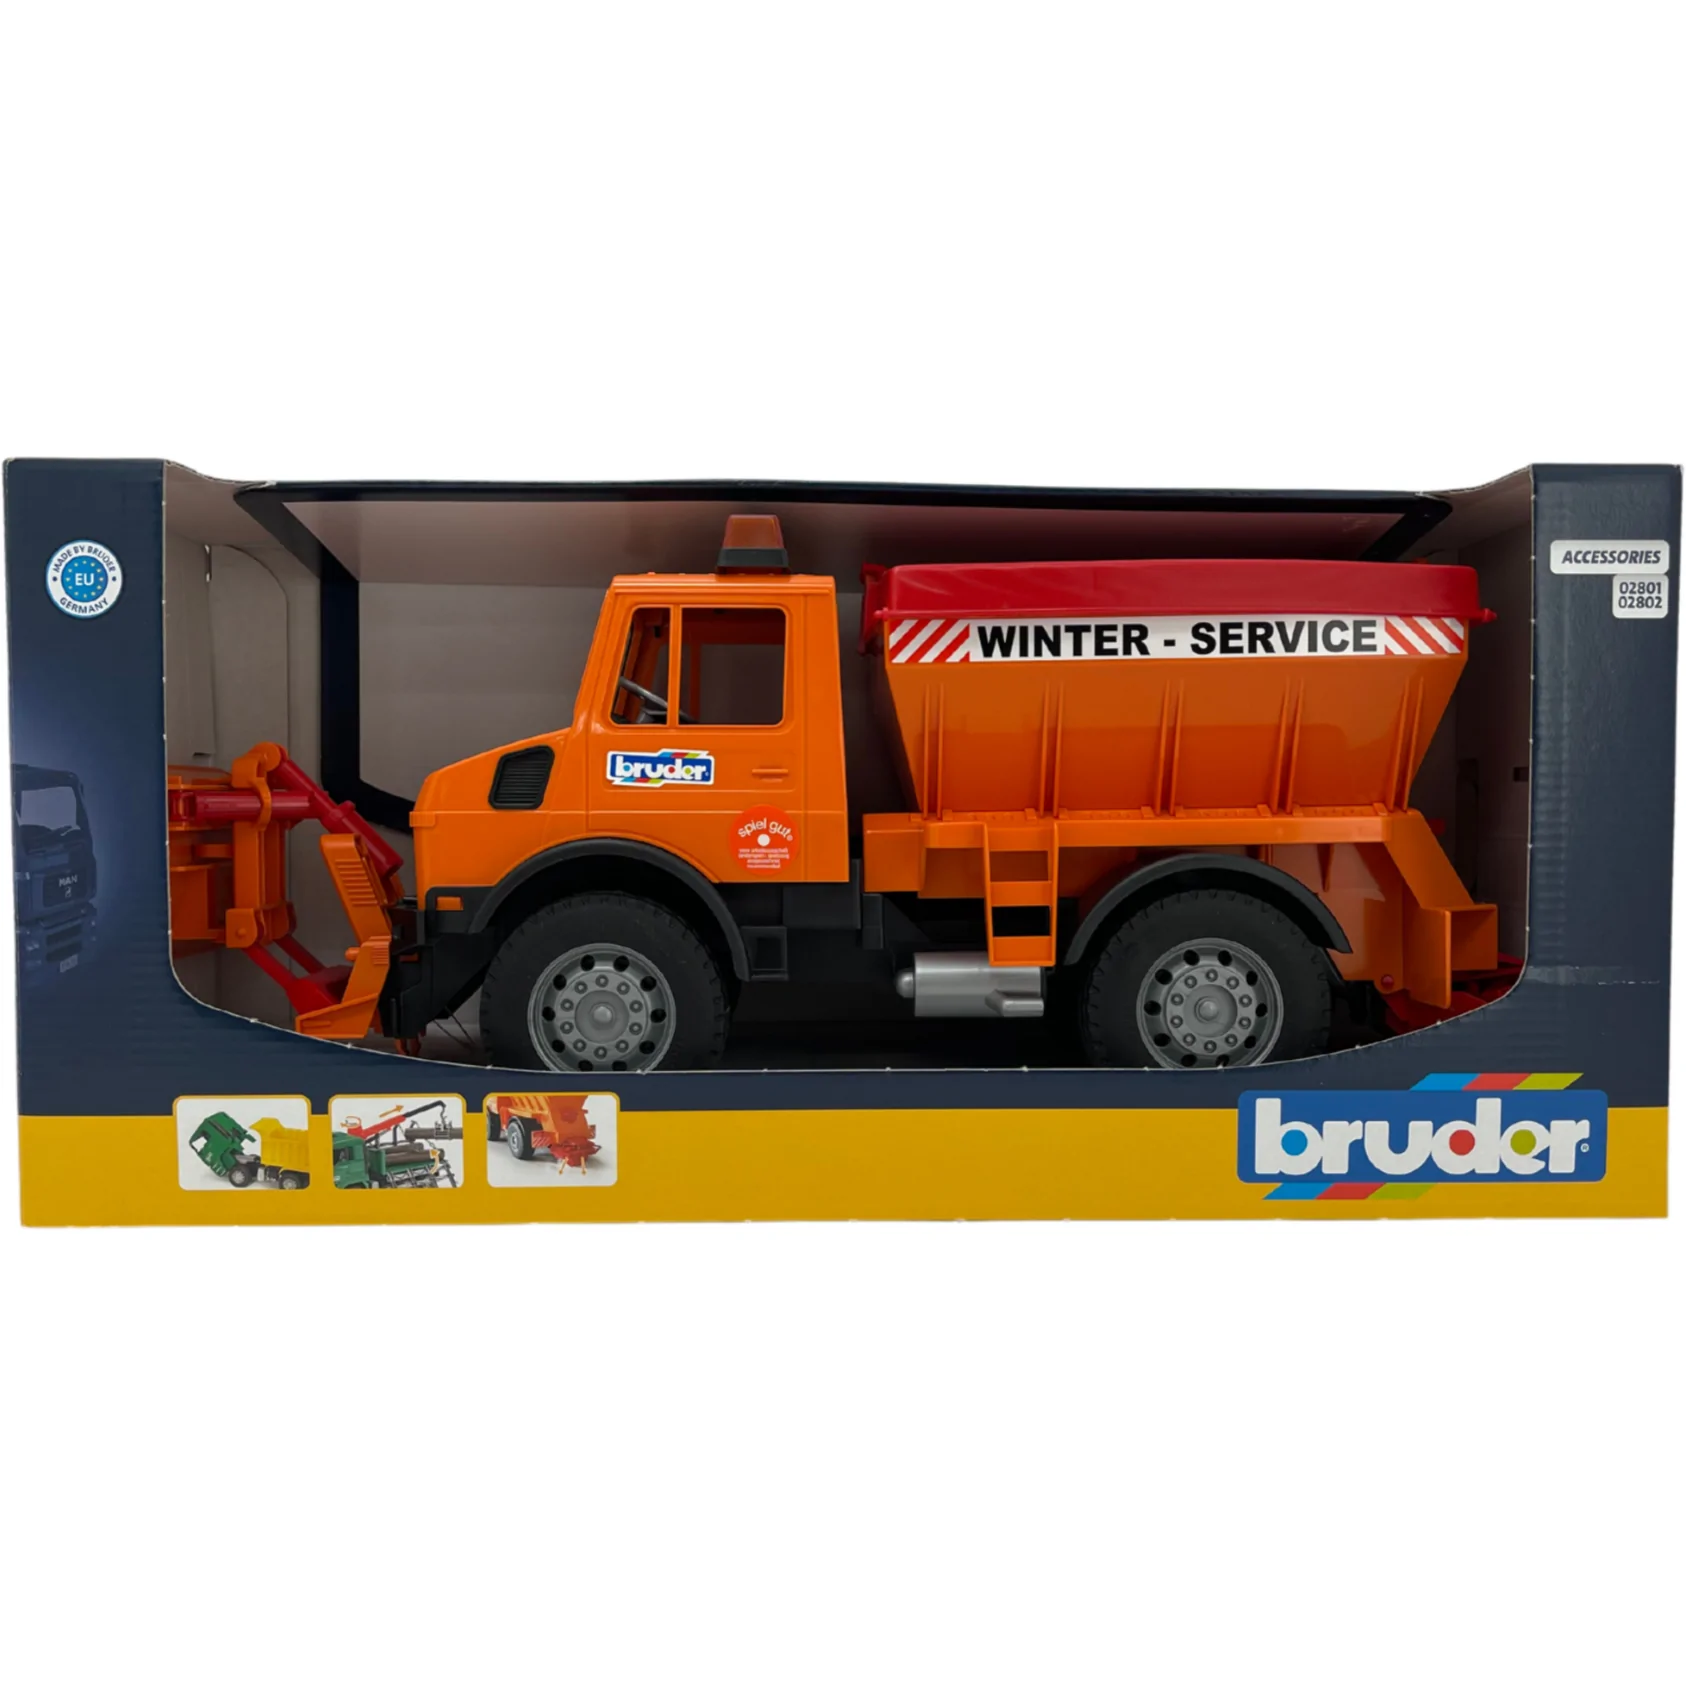 Bruder Snow Plow Toy / Winter Service Toy Truck / Road Maintenance Toy / Orange & Red